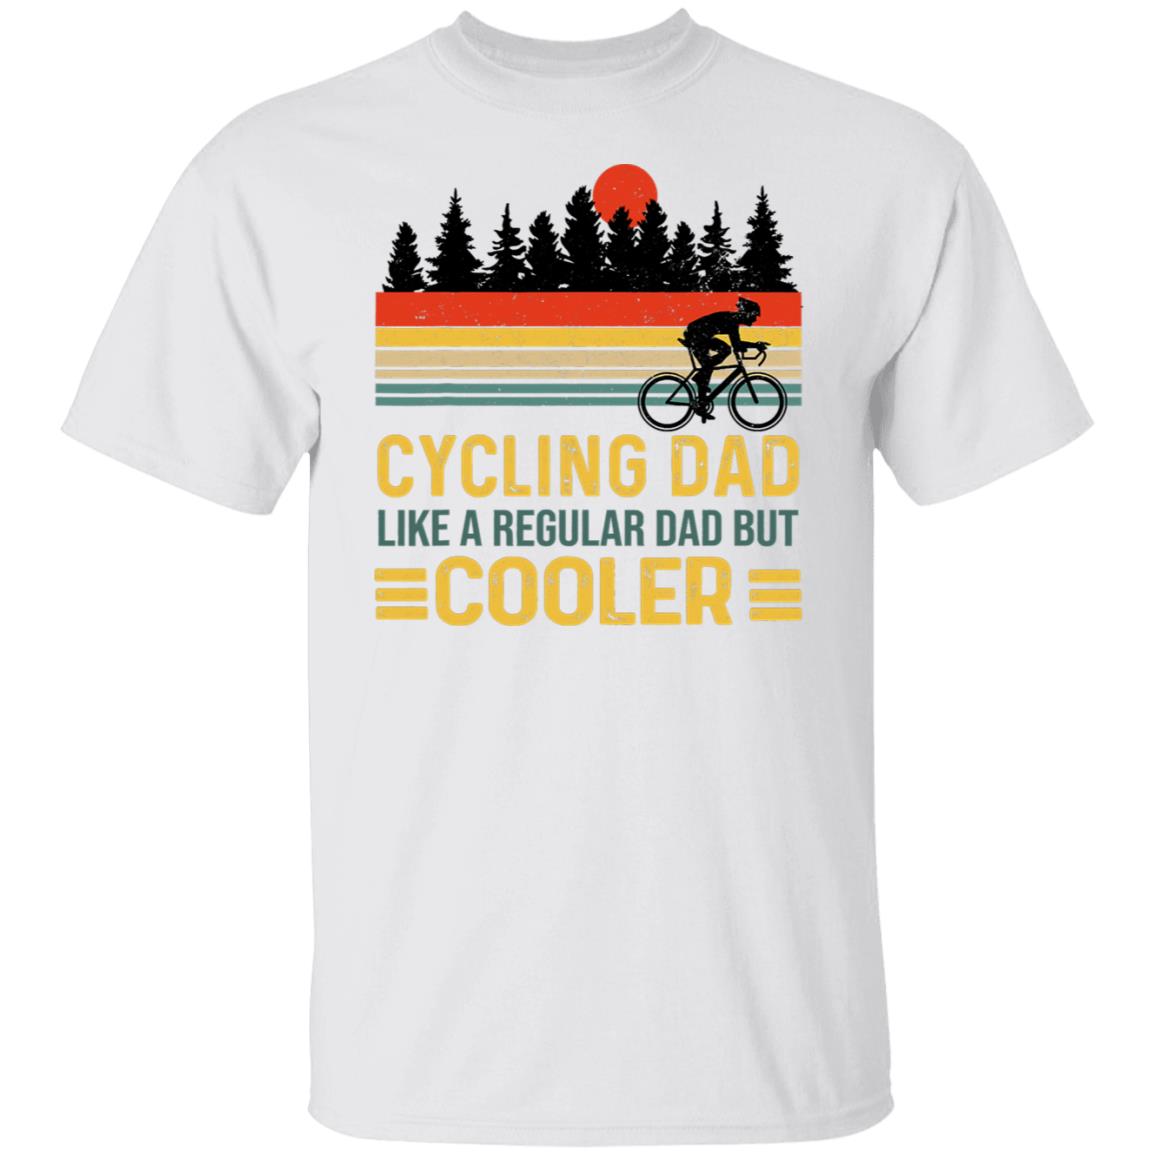 Vintage Cycling Dad T-shirt Like a regular dad but cooler Bike dad